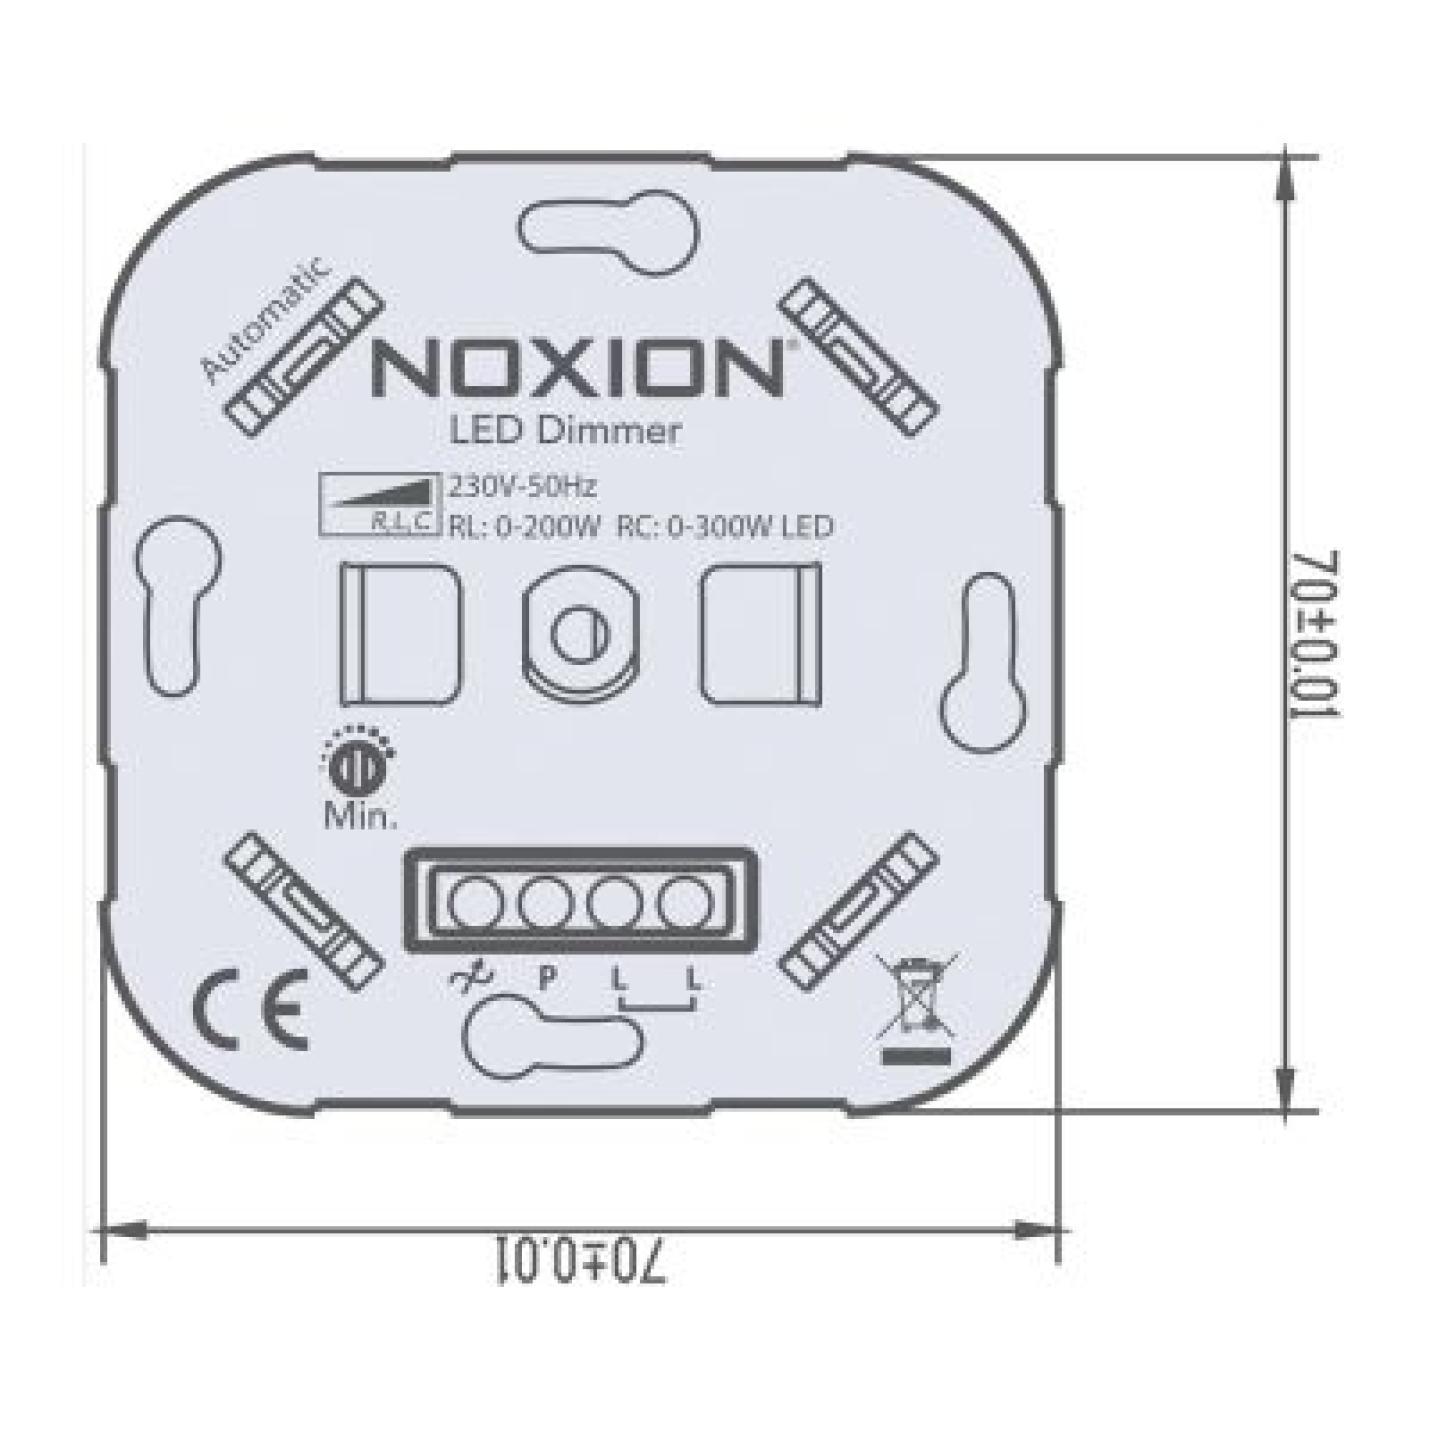 Noxion Automatische LED Dimmer Schakelaar RLC 0-300W 220-240V; Afbeelding: 5